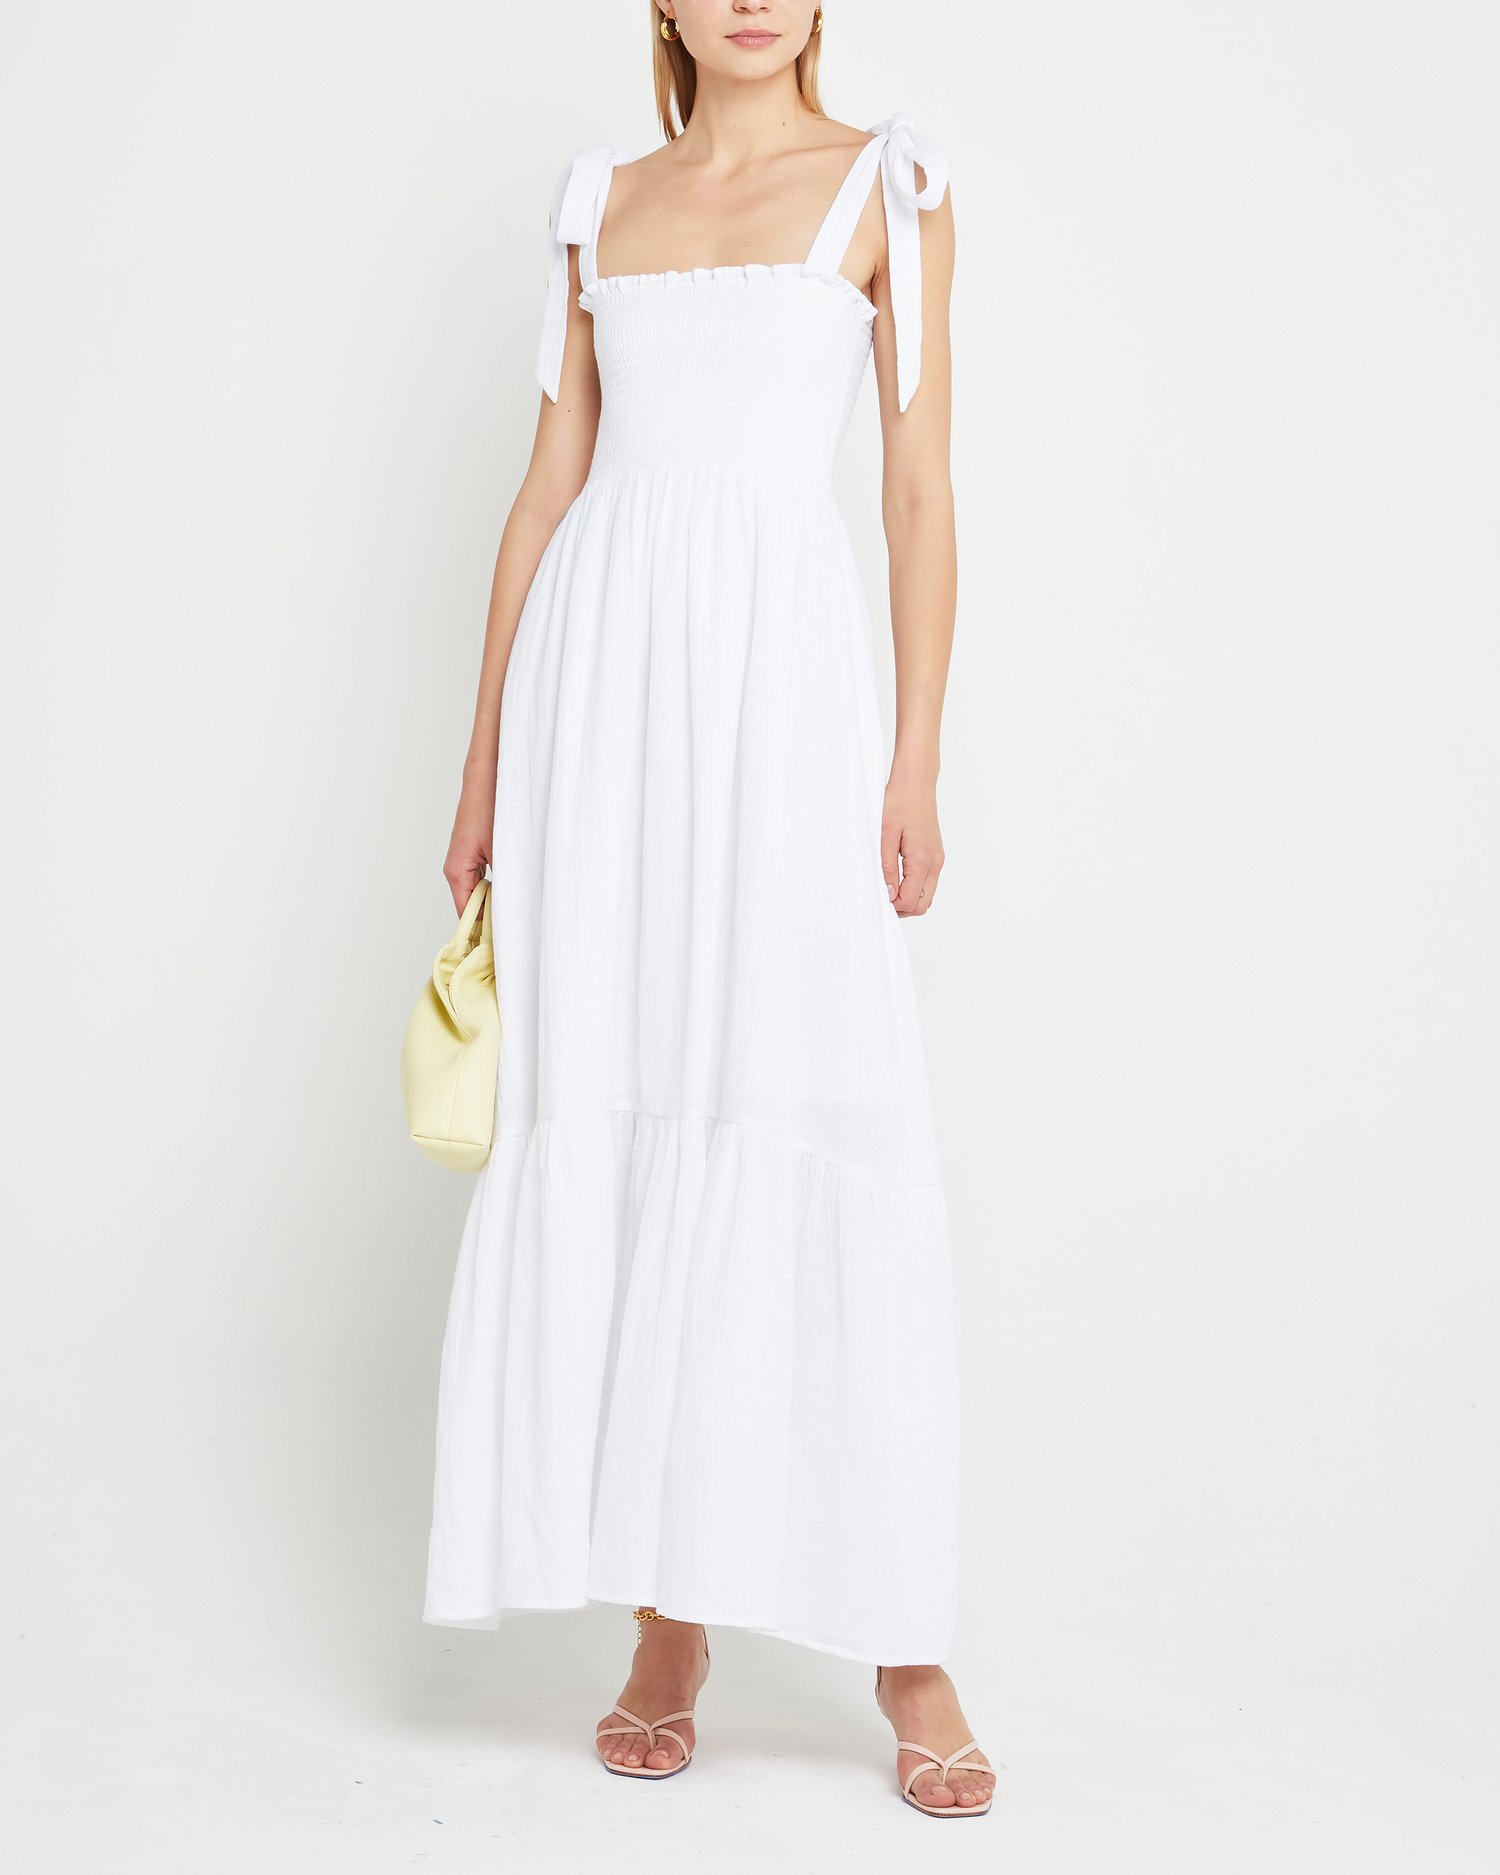 Fifth image of Cotton Winnie Dress, a white maxi dress, tie straps, smocked bodice